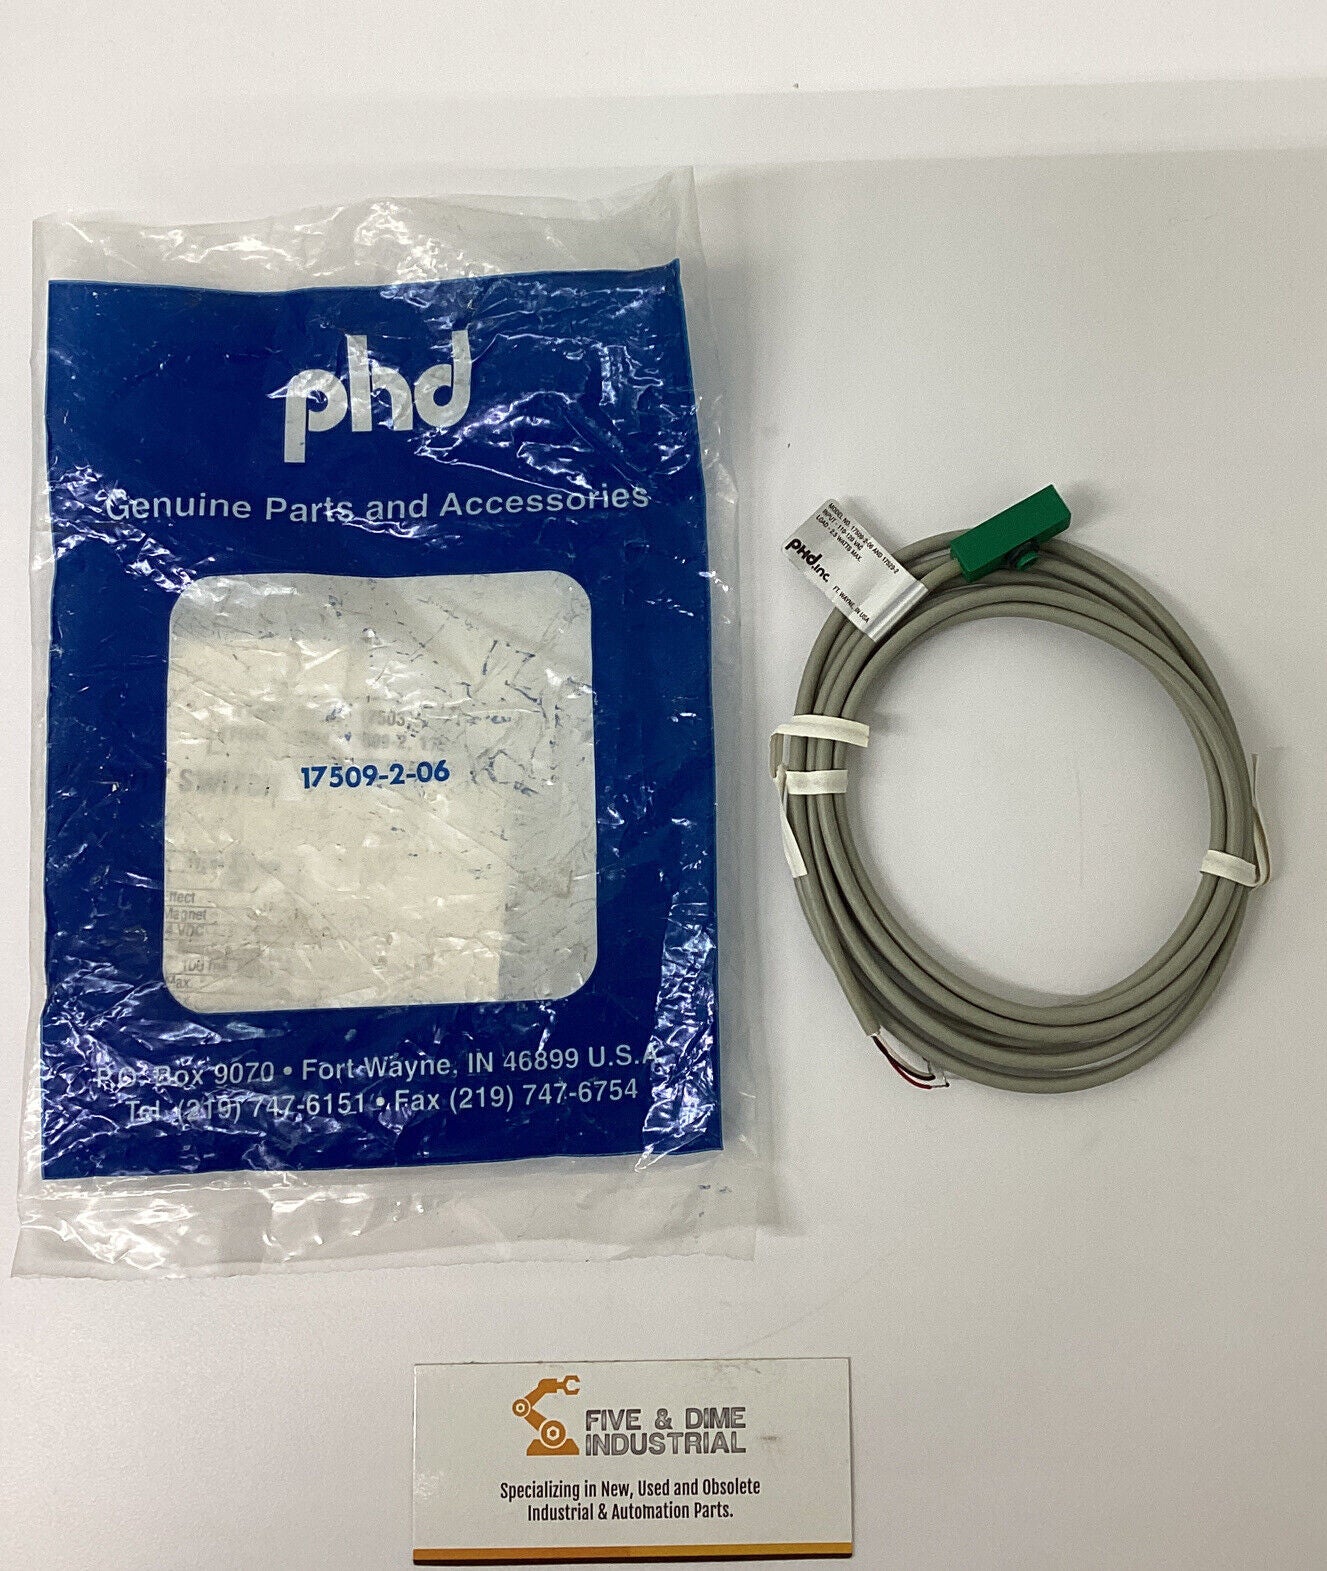 Phd 17509-2-06 Genuine Proximity Sensor  65-120 Vac (CL249)